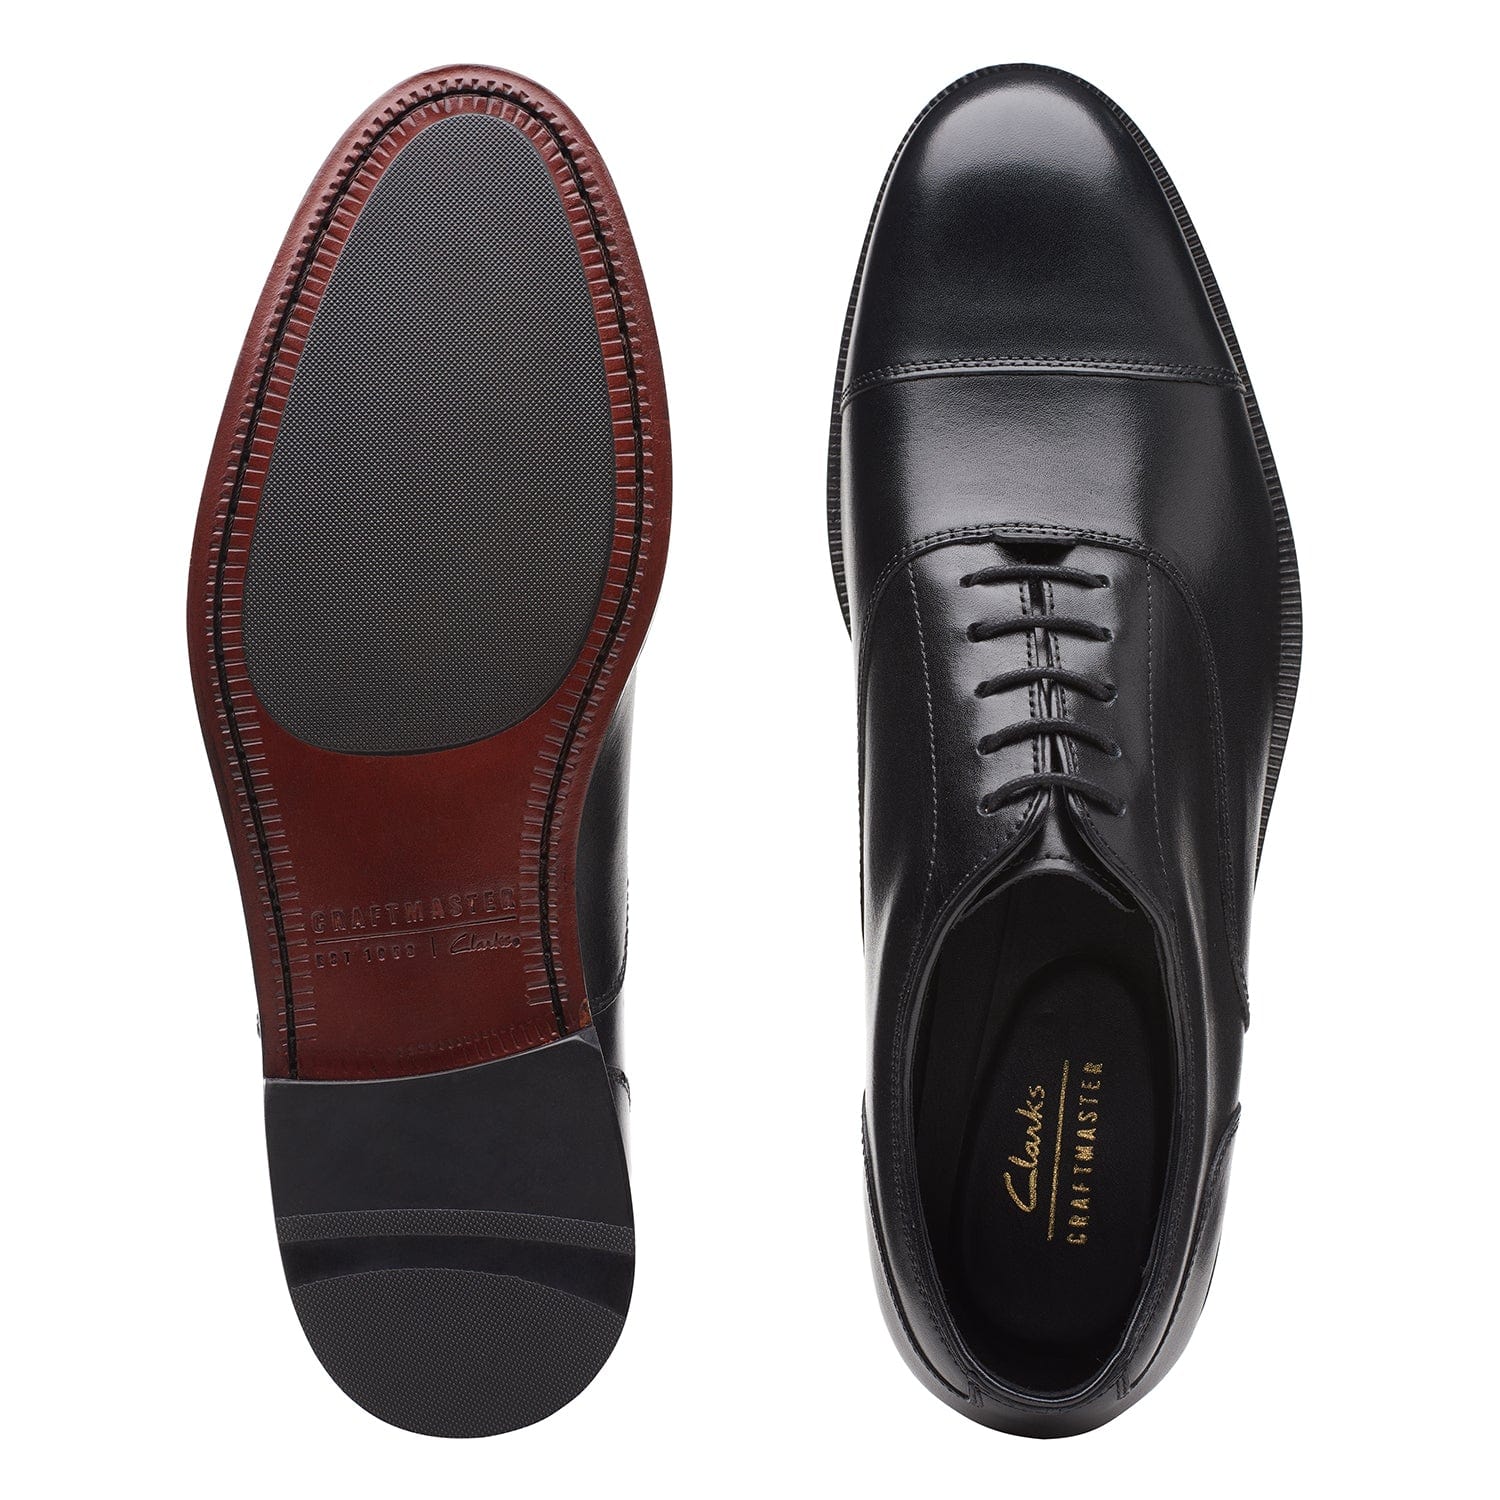 Clarks Craftdean Cap Shoes - Black Leather - 261691757 - G Width (Stan – Jashanmal